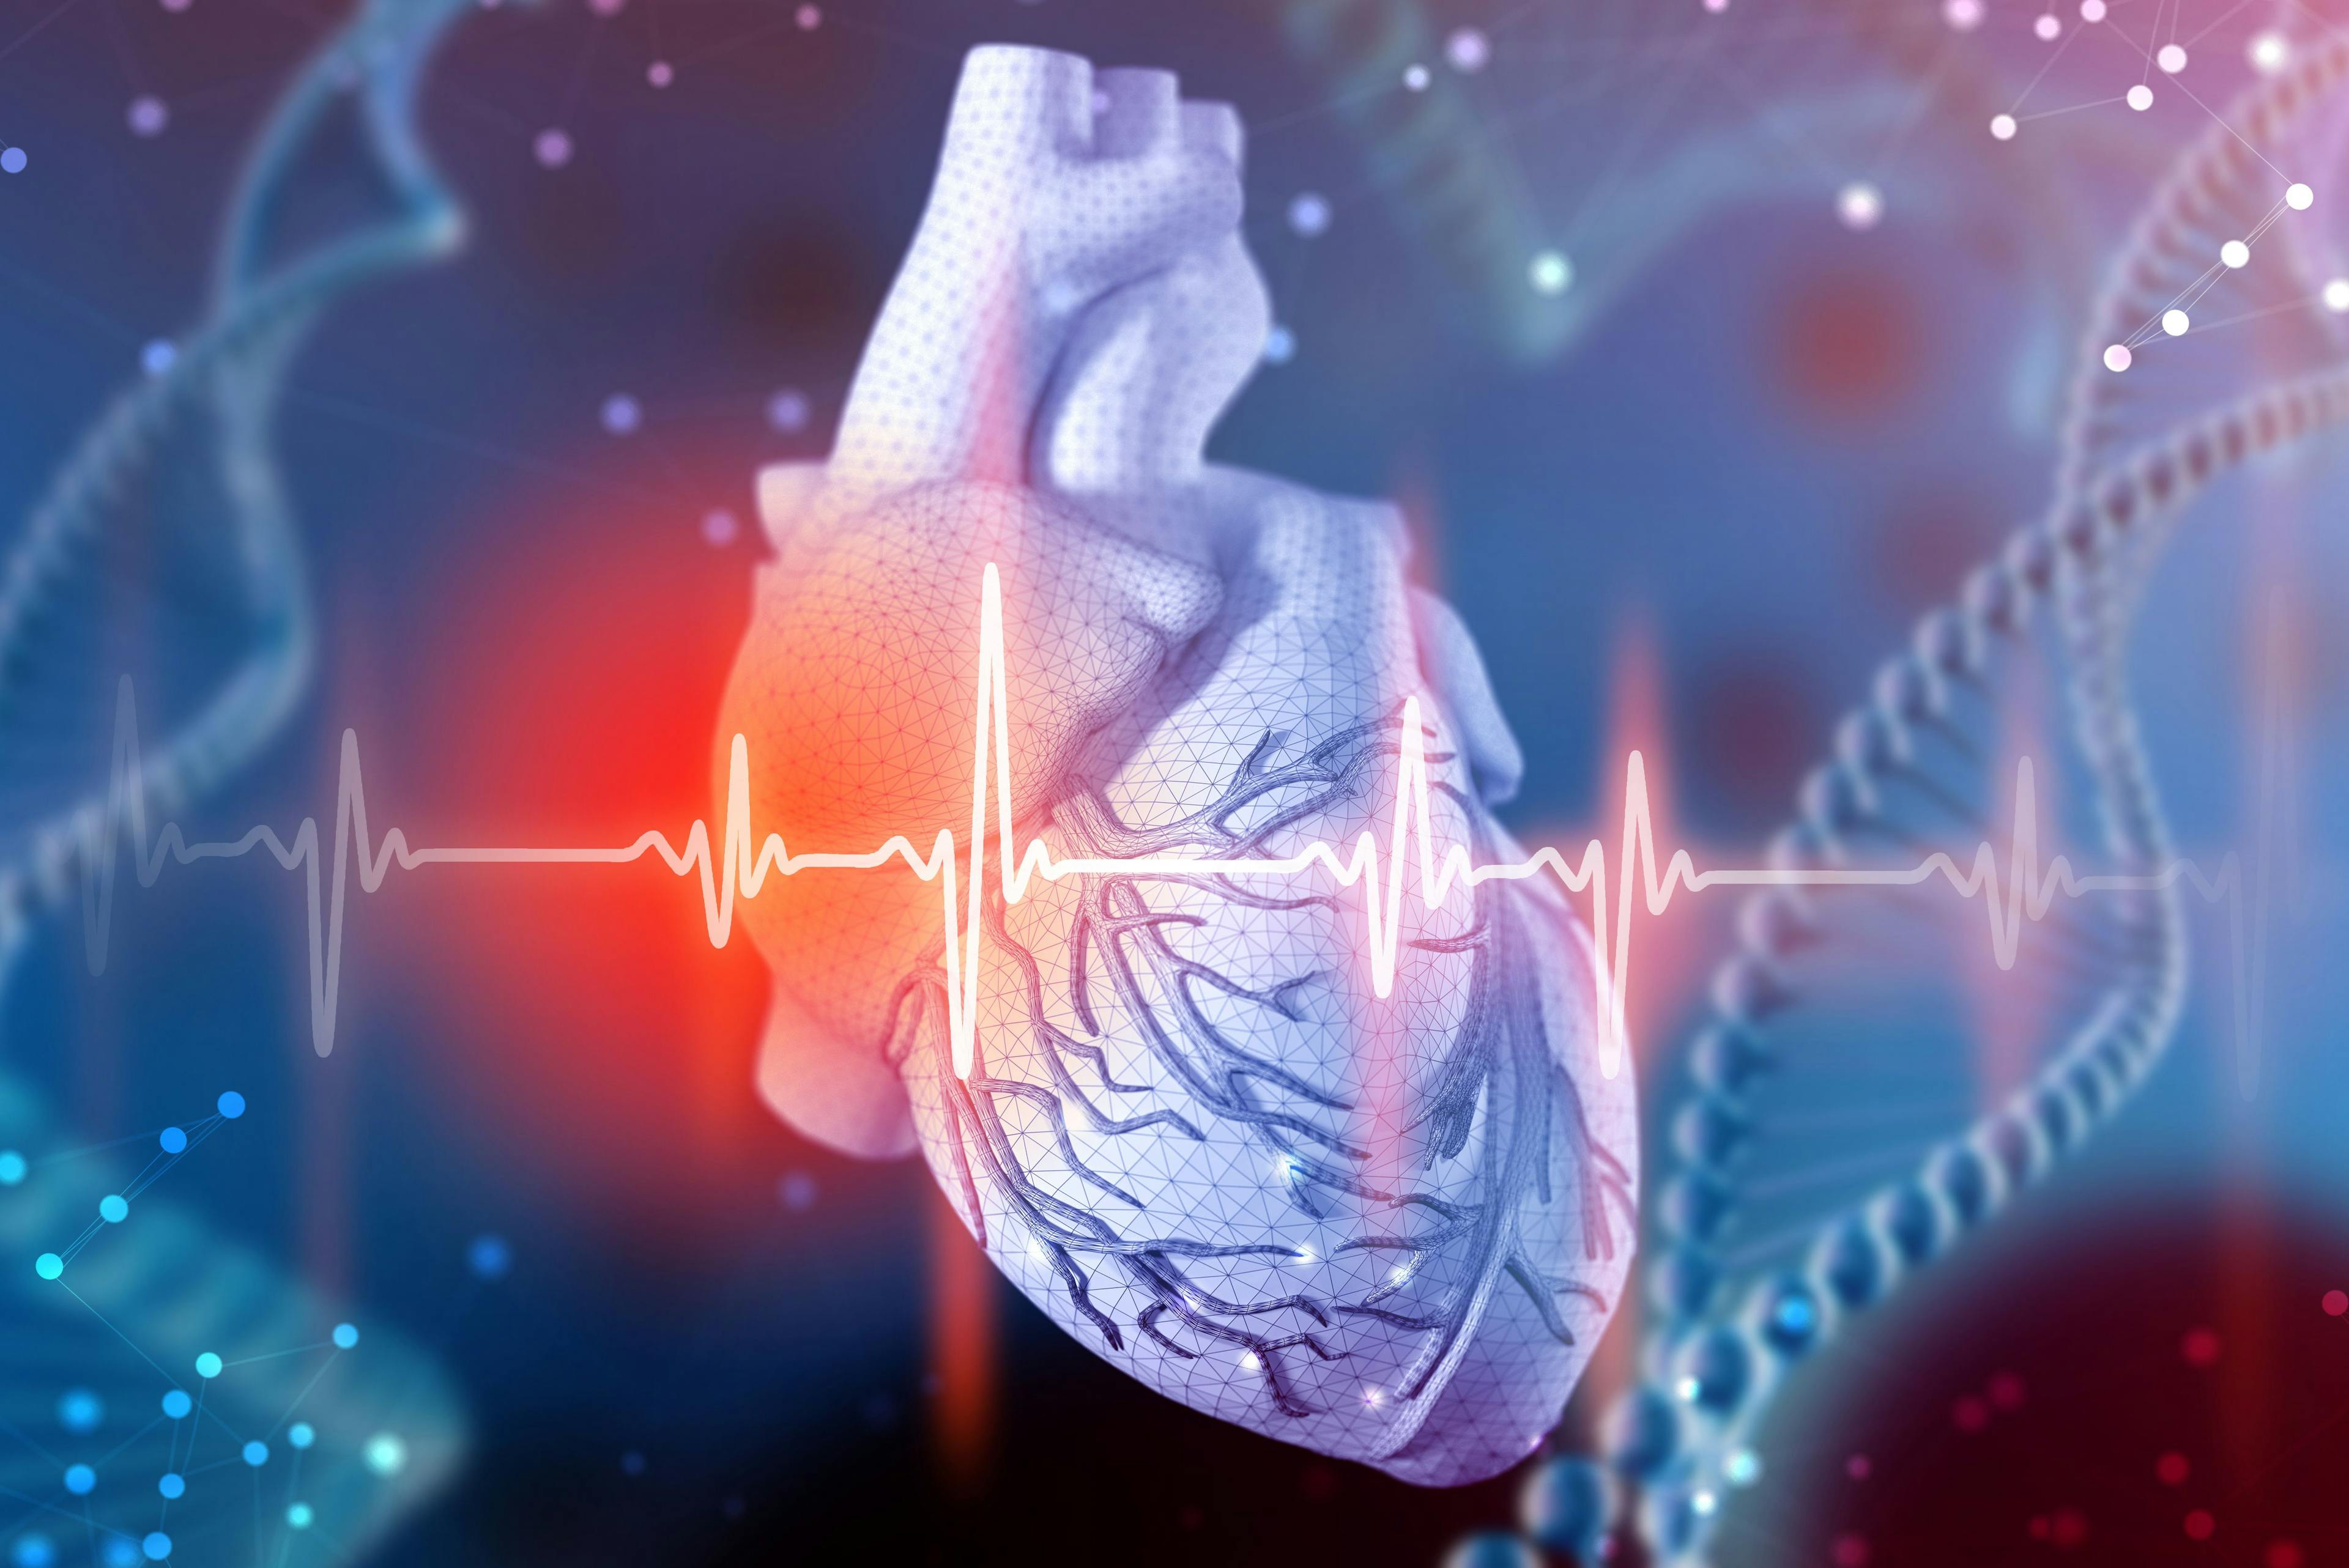 3d illustration of human heart and cardiogram on futuristic blue background | Image Credit: Artem - stock.adobe.com